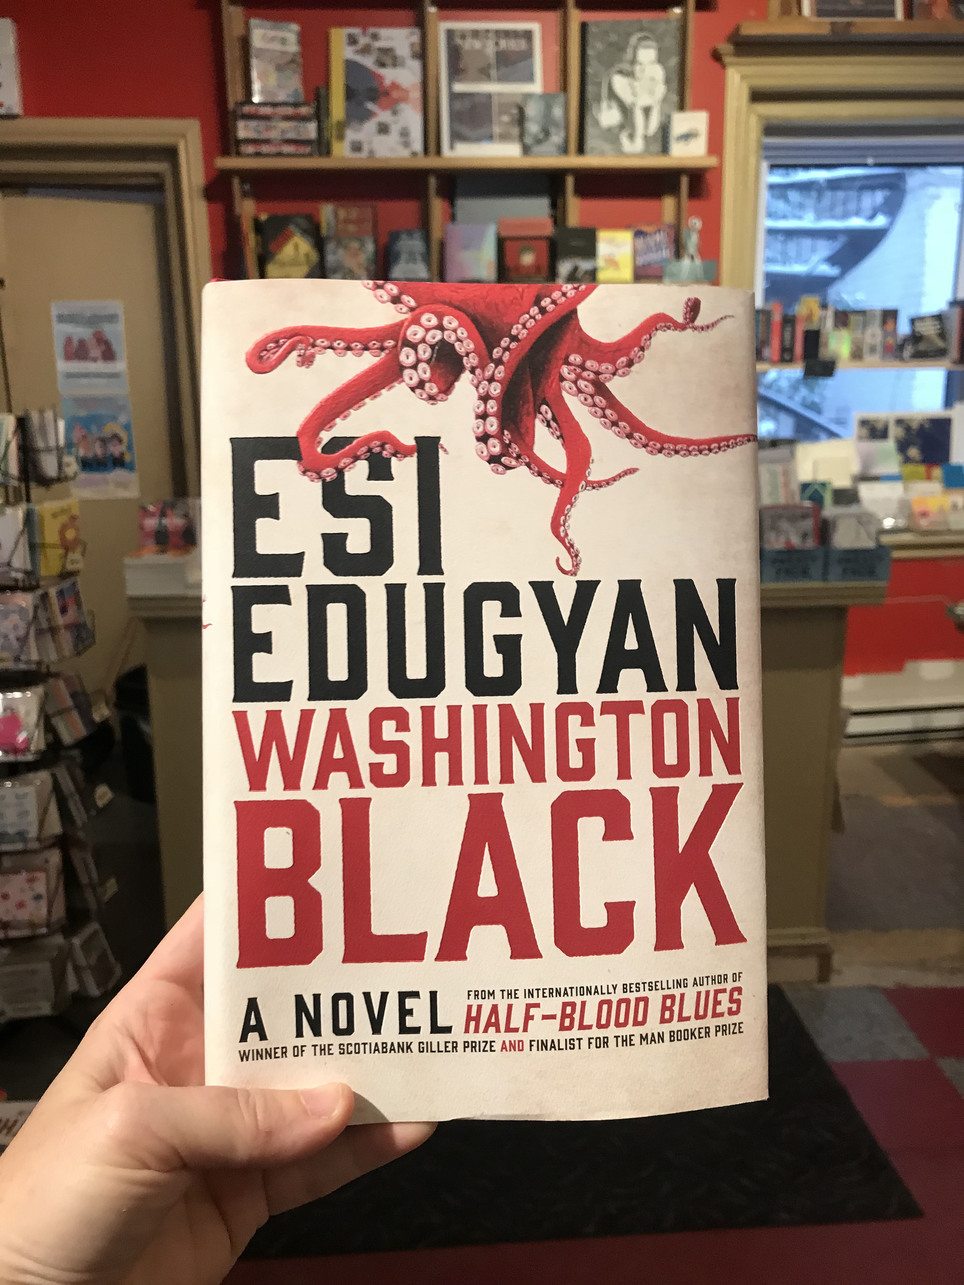 Congratulations Esi Edugyan! Washington Black in both stores!